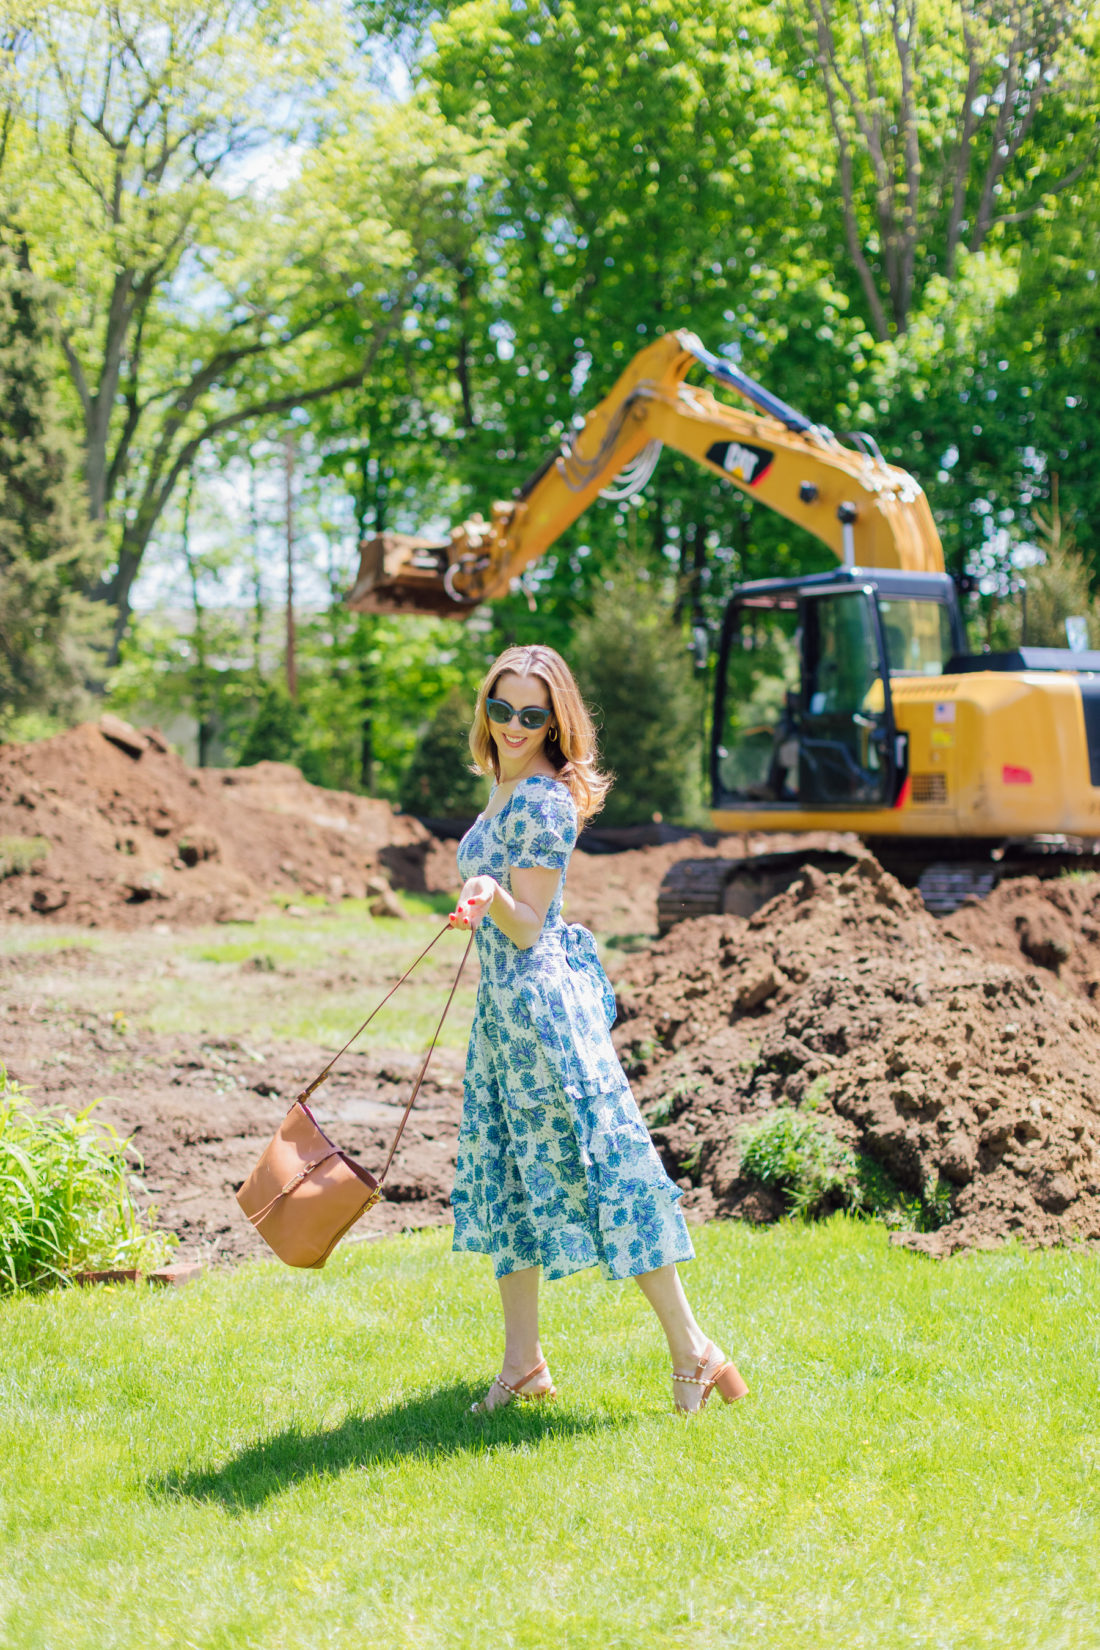 Eva Amurri Martino walks thorugh the construction in backyard of her home